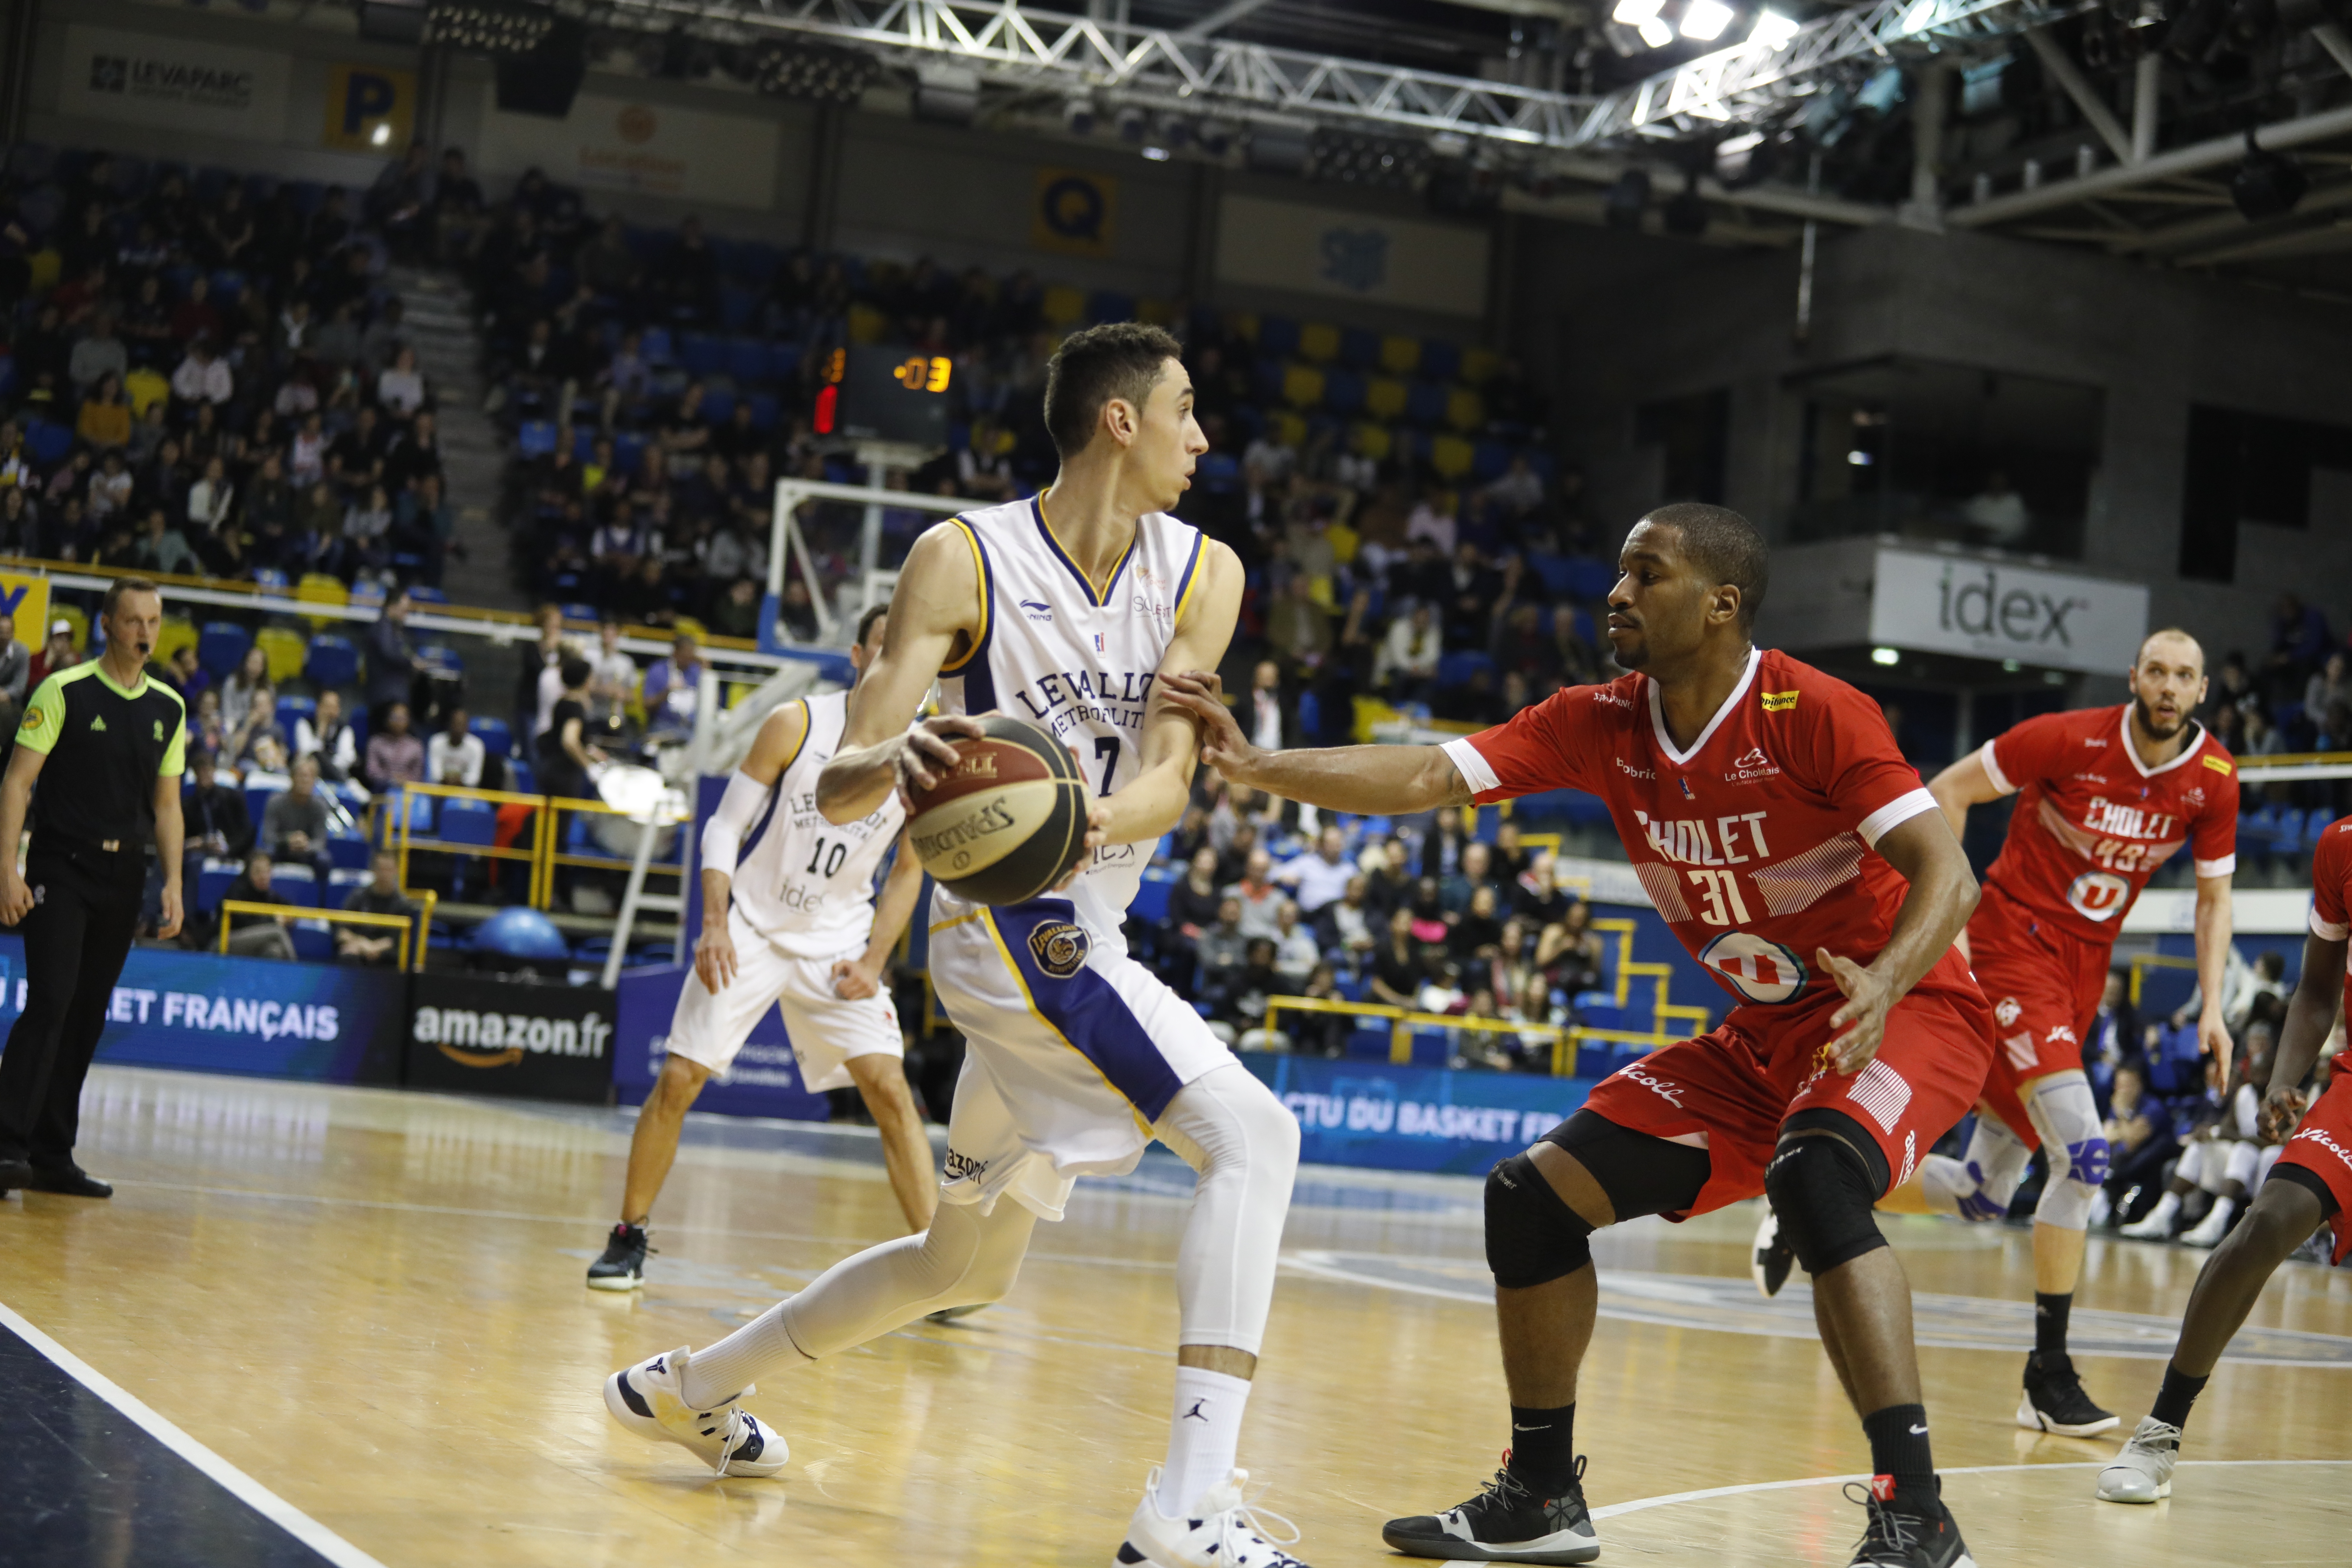 Levallois Metropolitans - Cholet Basket (09-04-19)